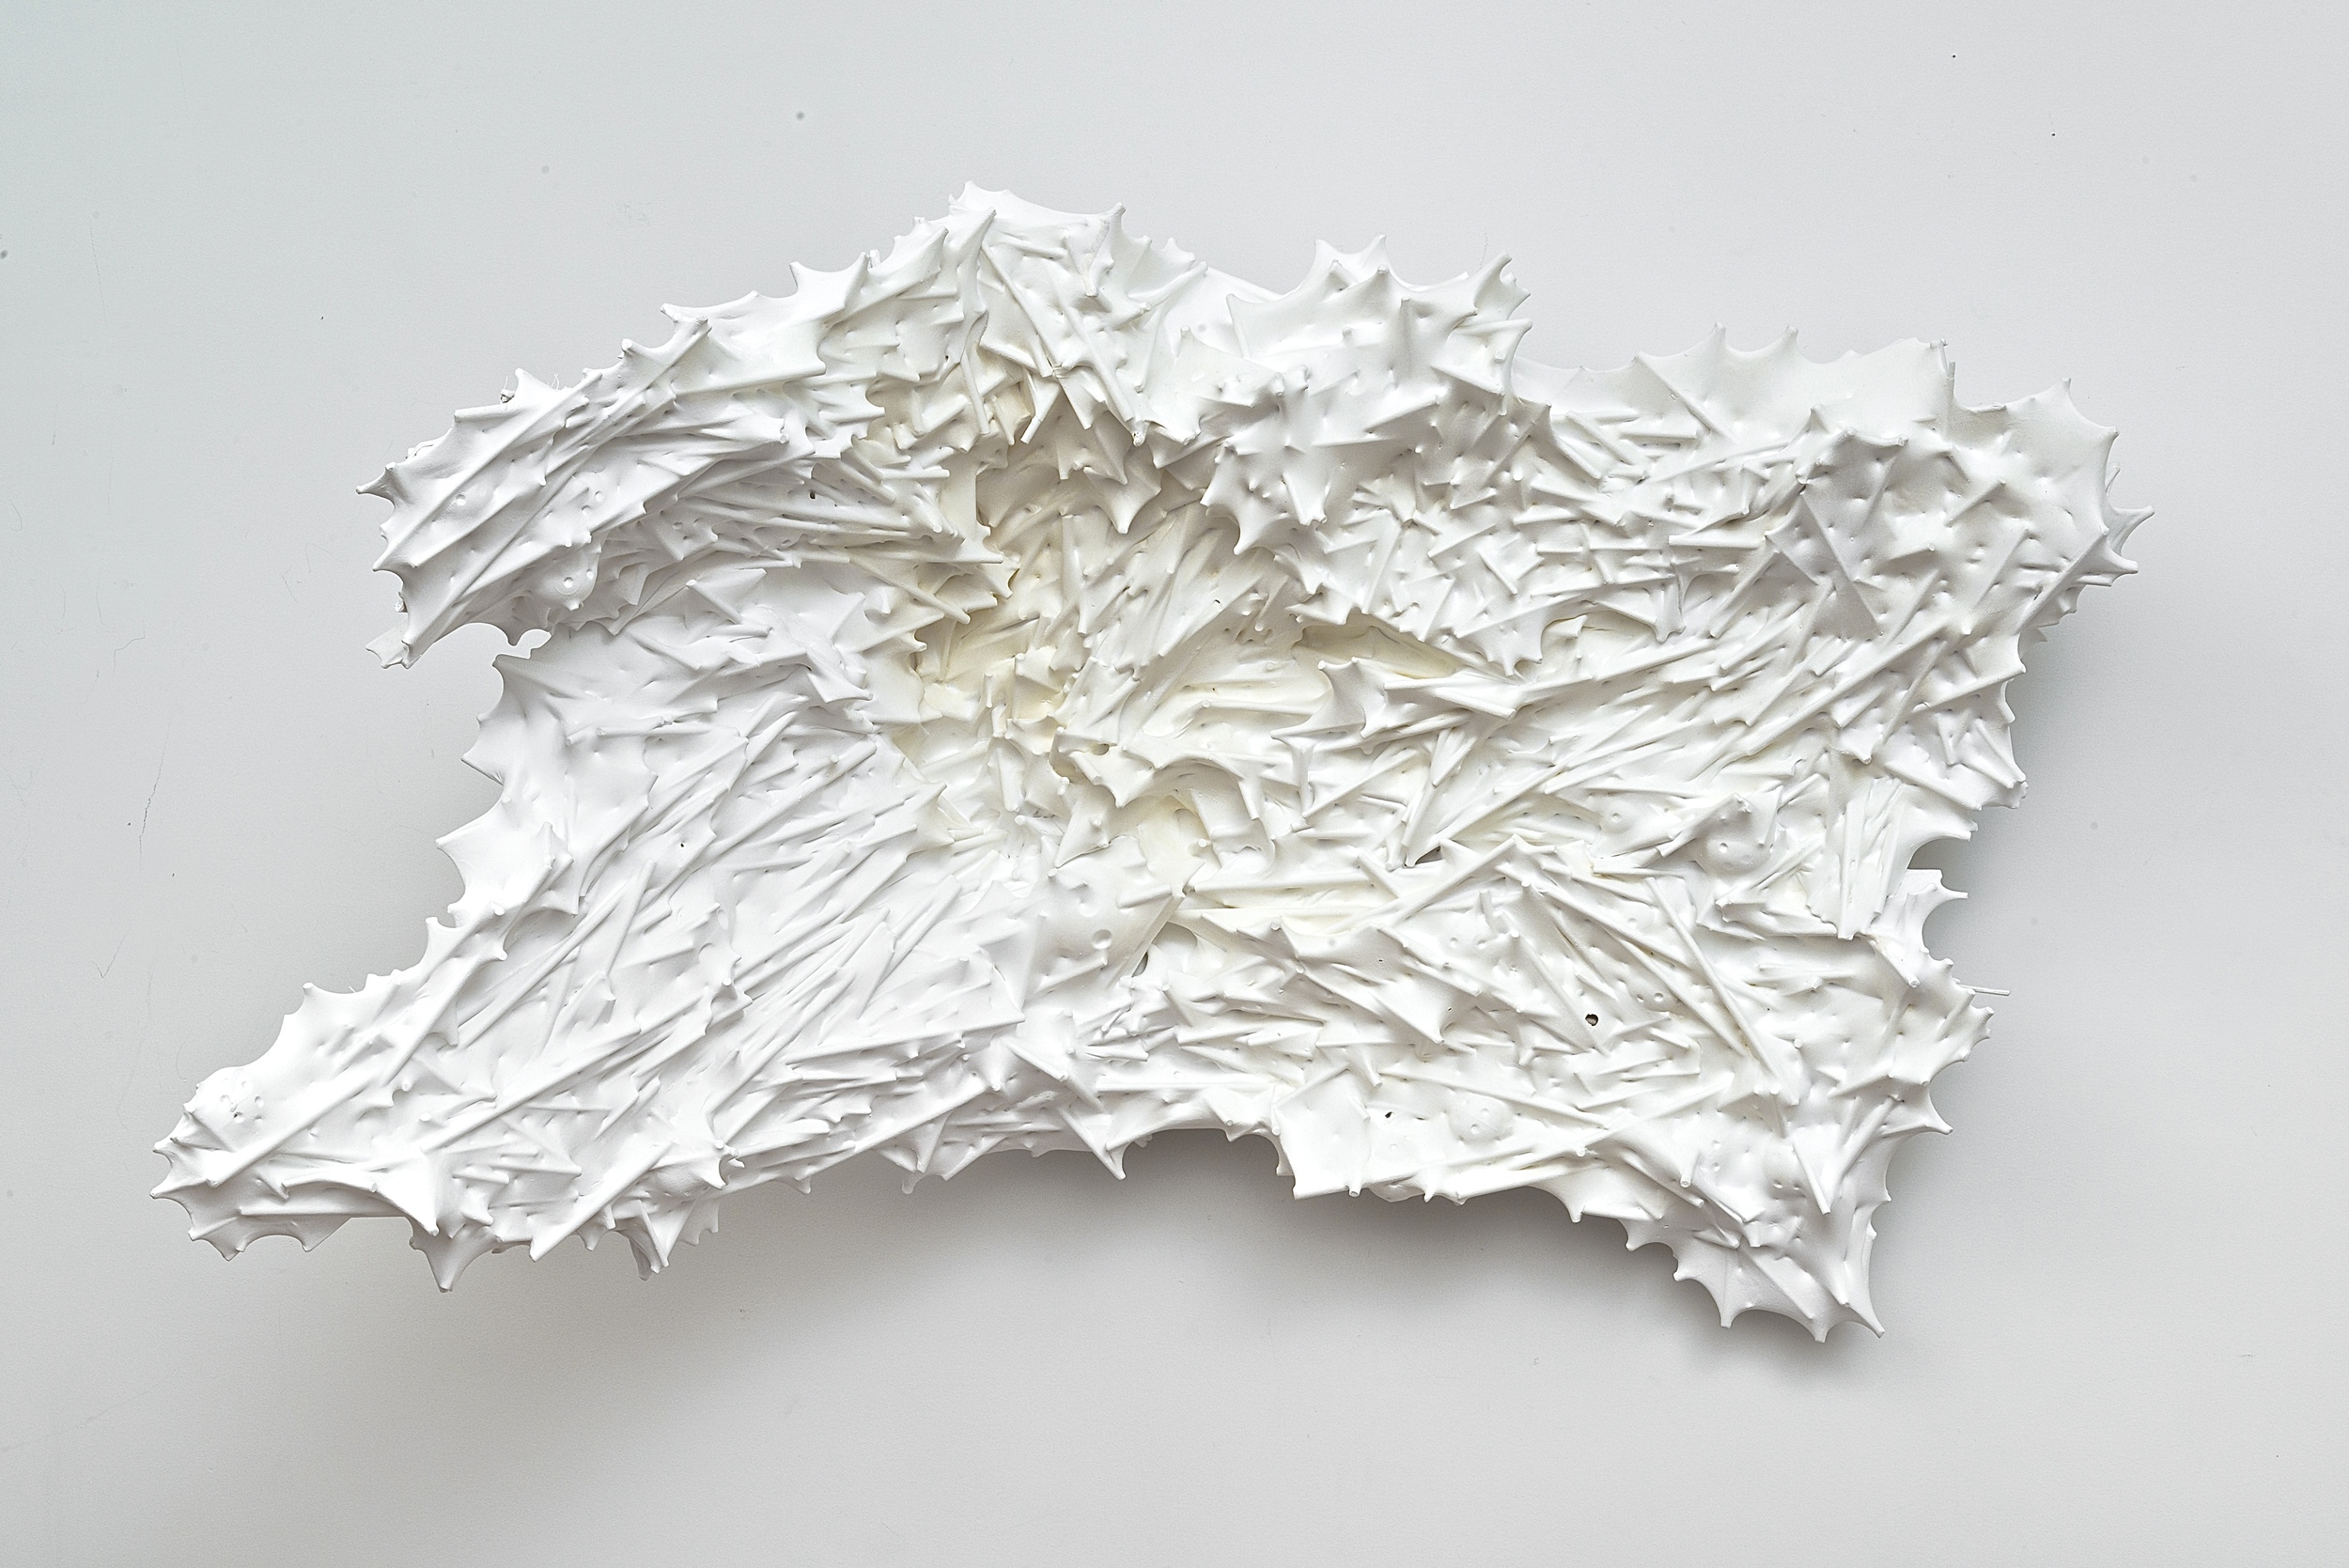   Untitled (sort of corner), &nbsp;2014 silk, acrylic, wood, thread plastic, and epoxy 30 x 36 x 24 inches 76.2 x 91.4 x 61 cm 